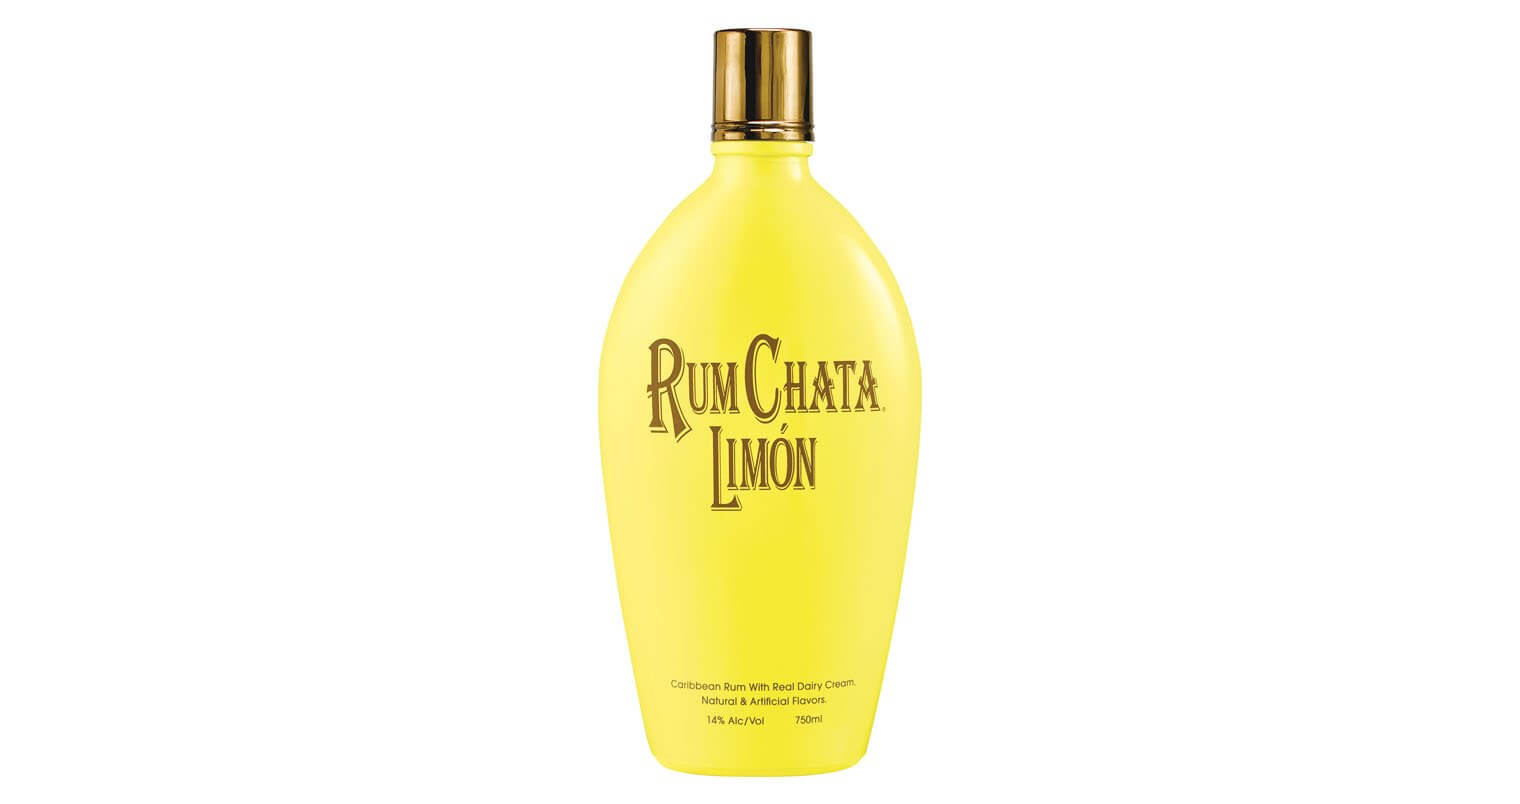 RumChata Limón, bottle on white, featured image